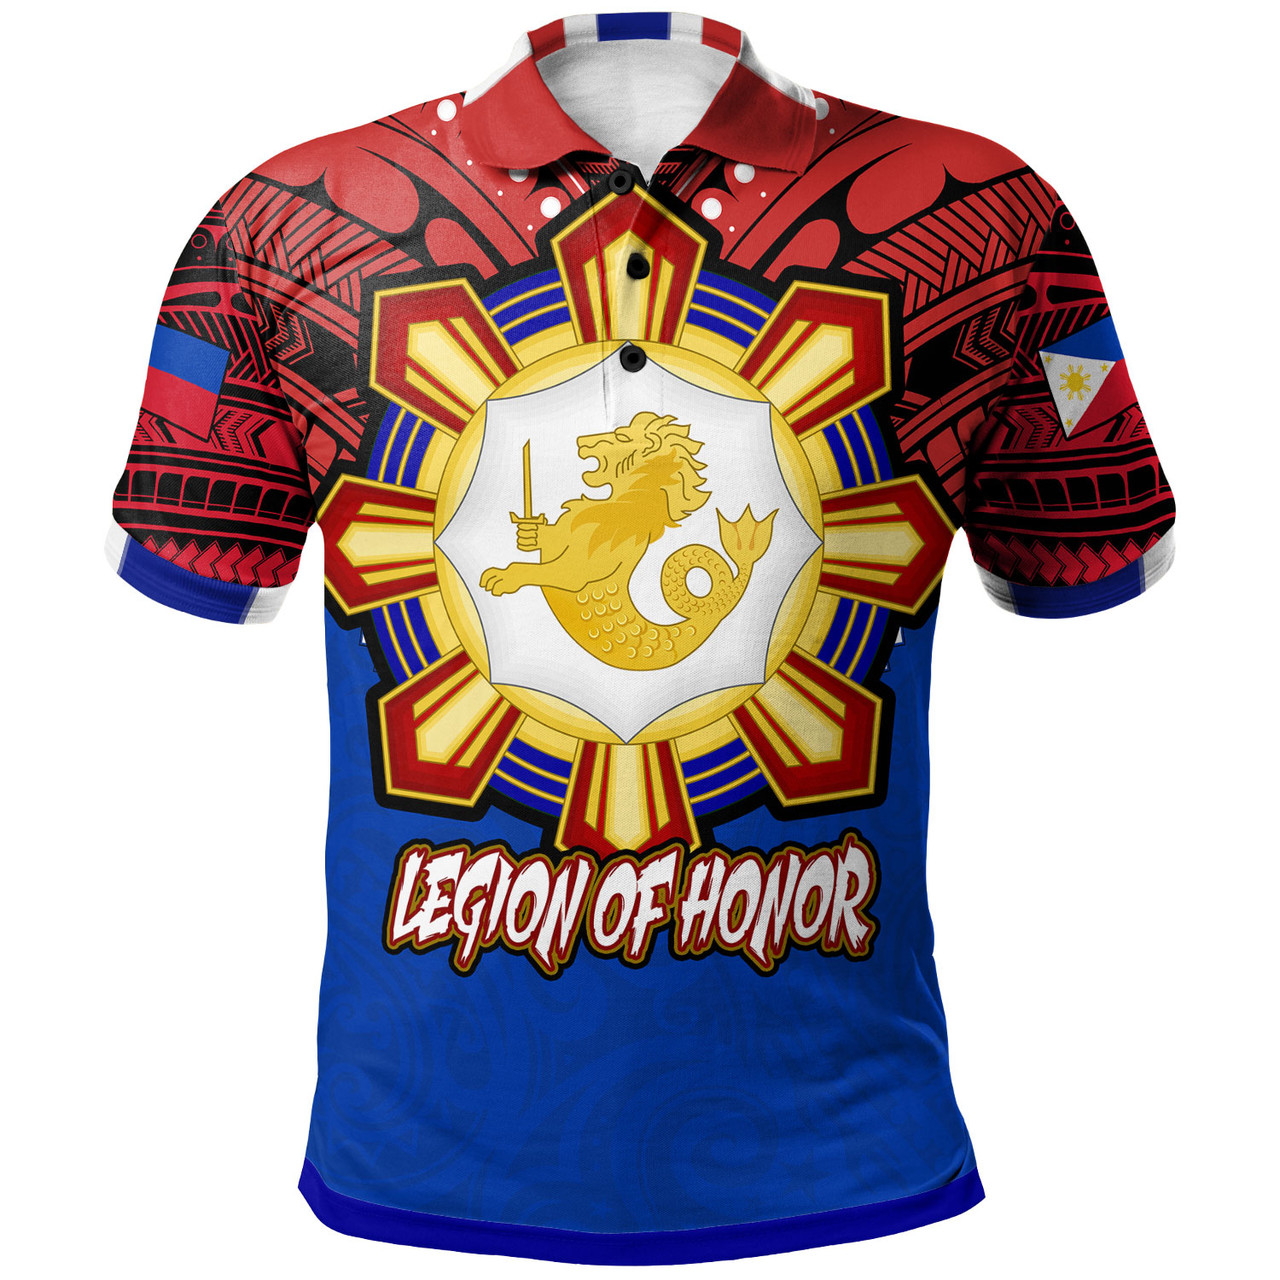 Philippines Polo Shirt - Custom Philippine Legion of Honor Tribal Style